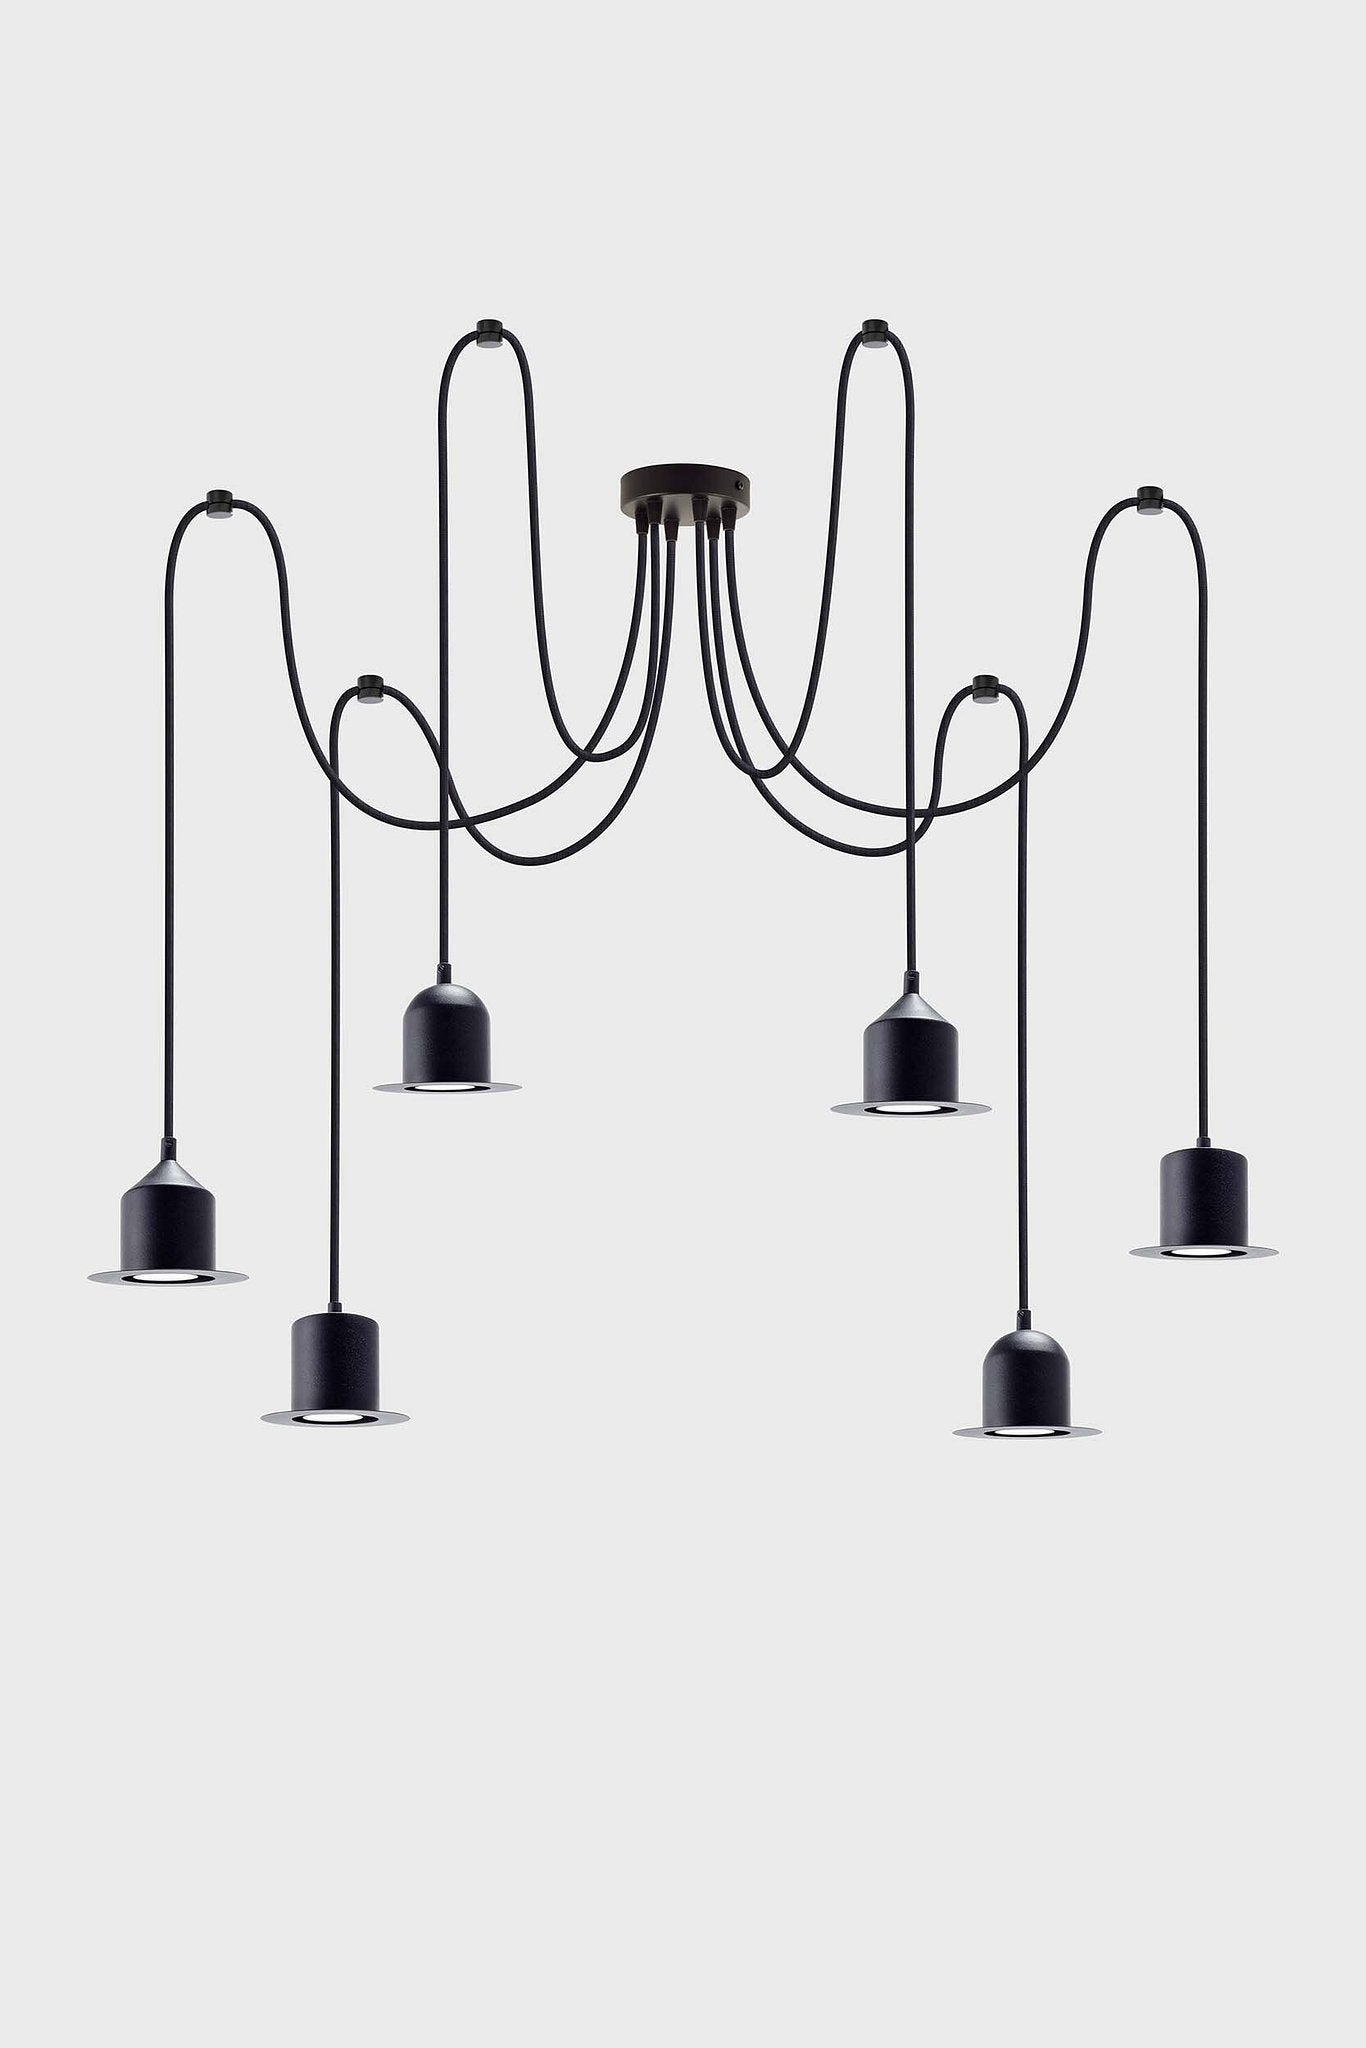 EMKO HAT Pendant Lamp Set of 3 Pendant Lamps